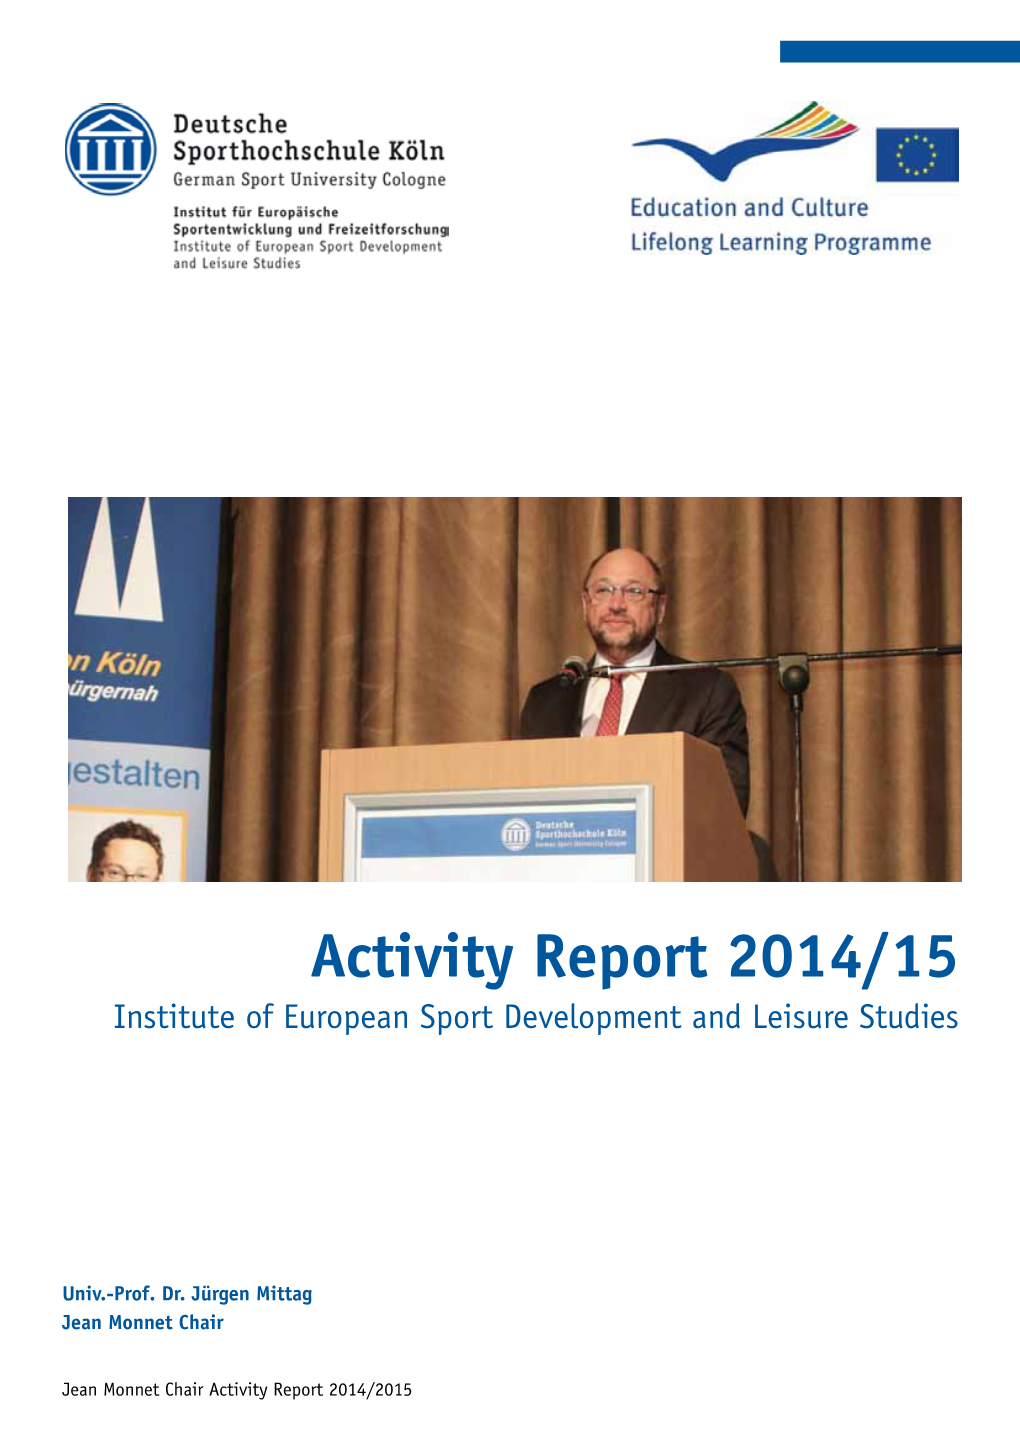 Activity Report 2014/15 Institute of European Sport Development and Leisure Studies